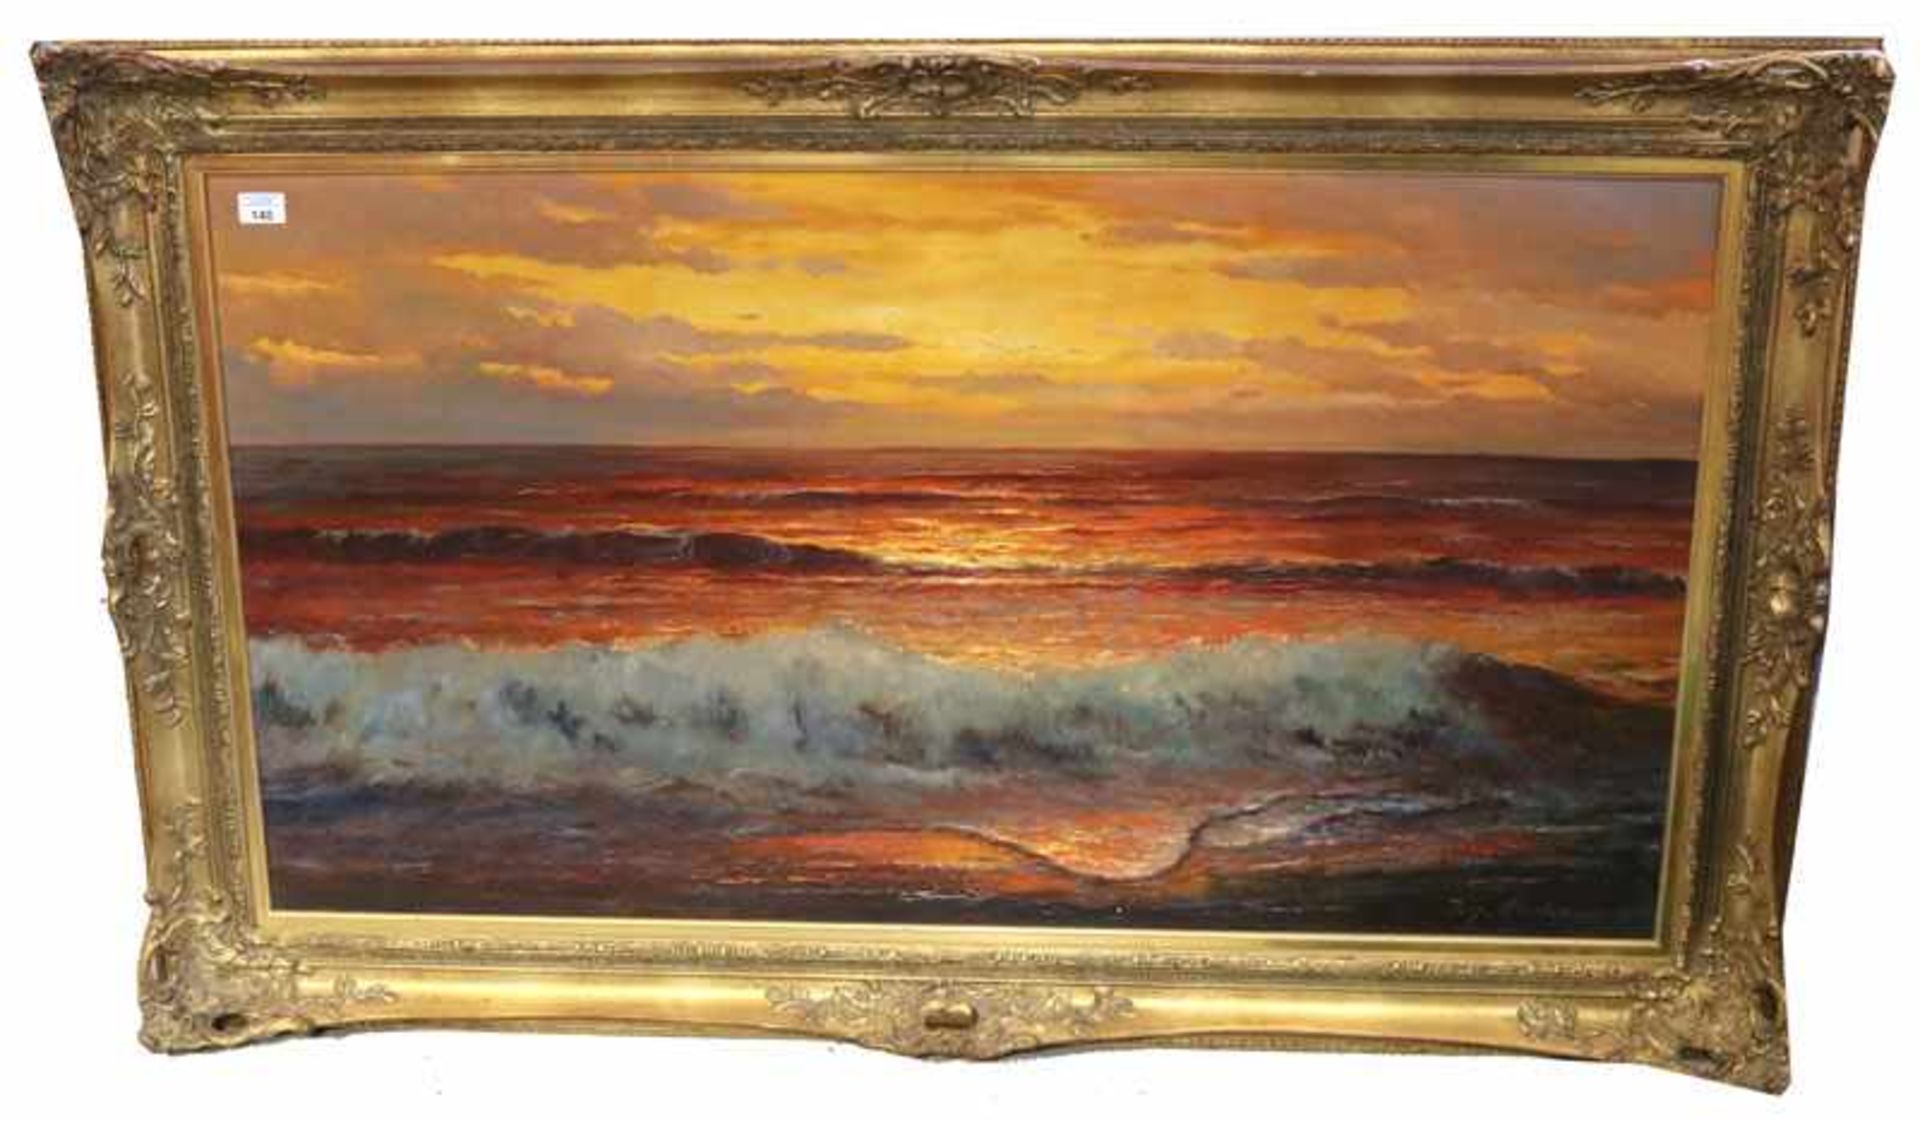 Gemälde ÖL/LW 'Abendstimmung am Meer', signiert Andersen, Jörg, gerahmt, incl. Rahmen 86 cm x 140